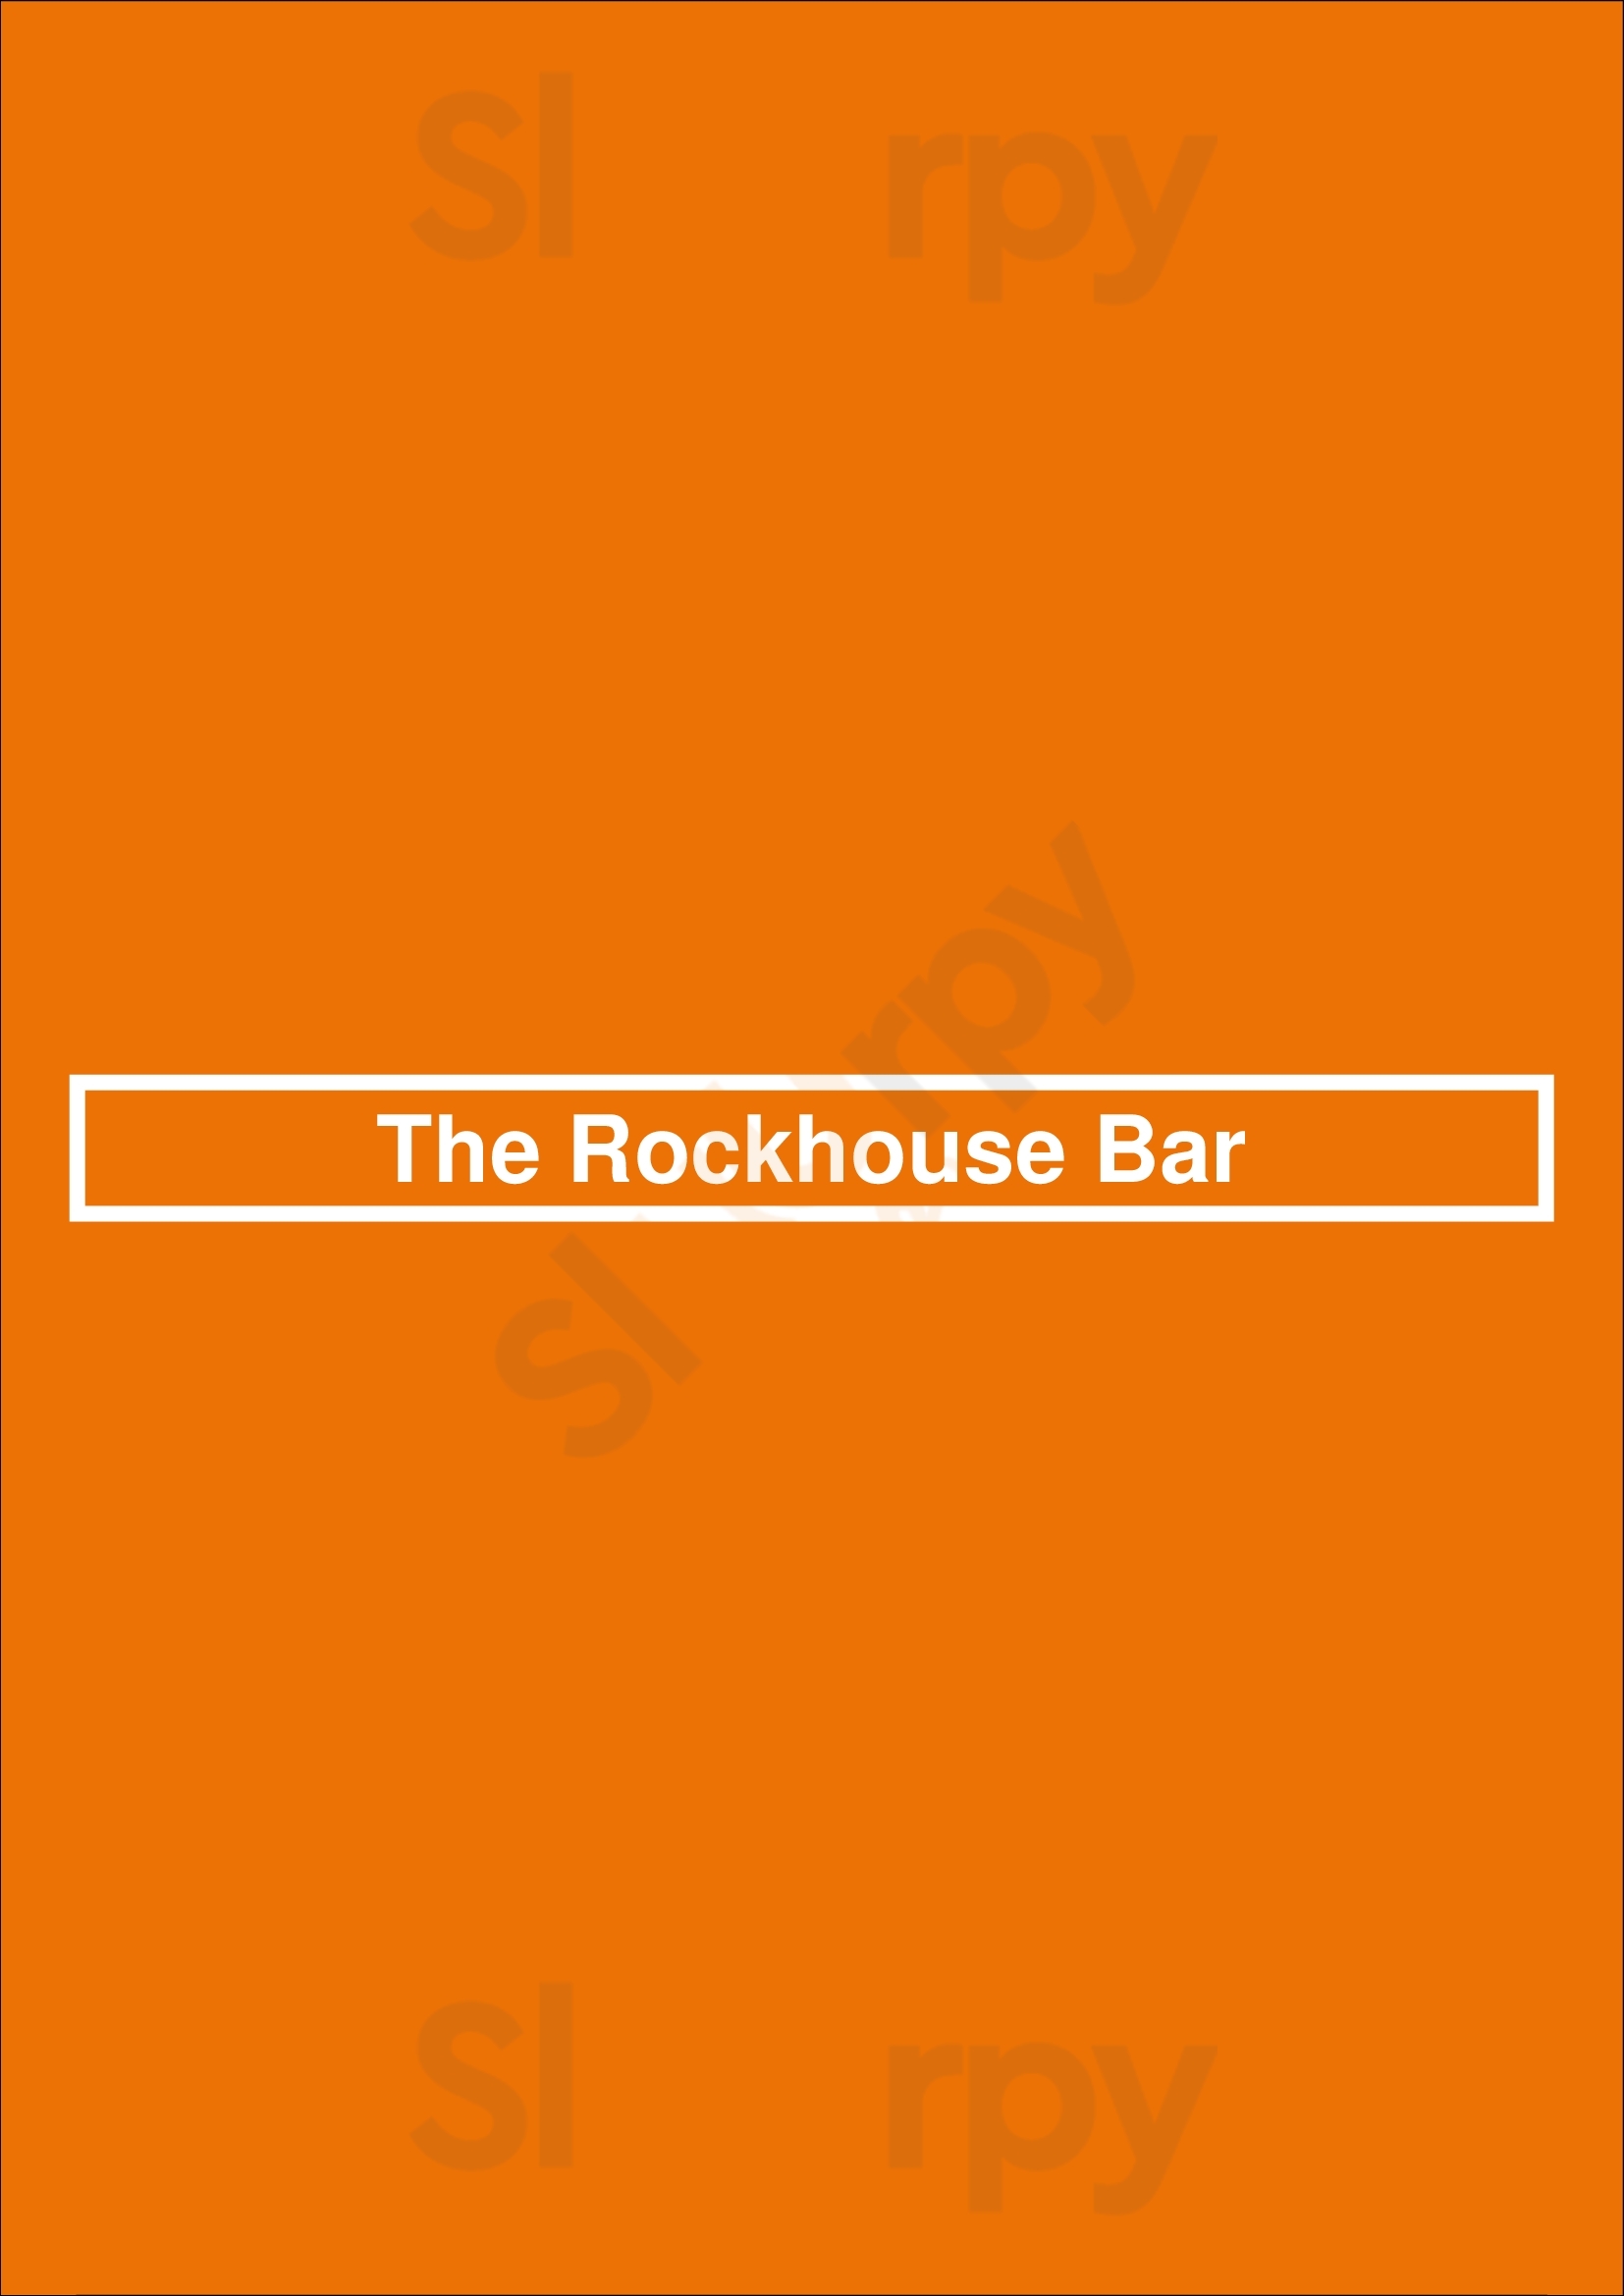 The Rockhouse Bar Las Vegas Menu - 1